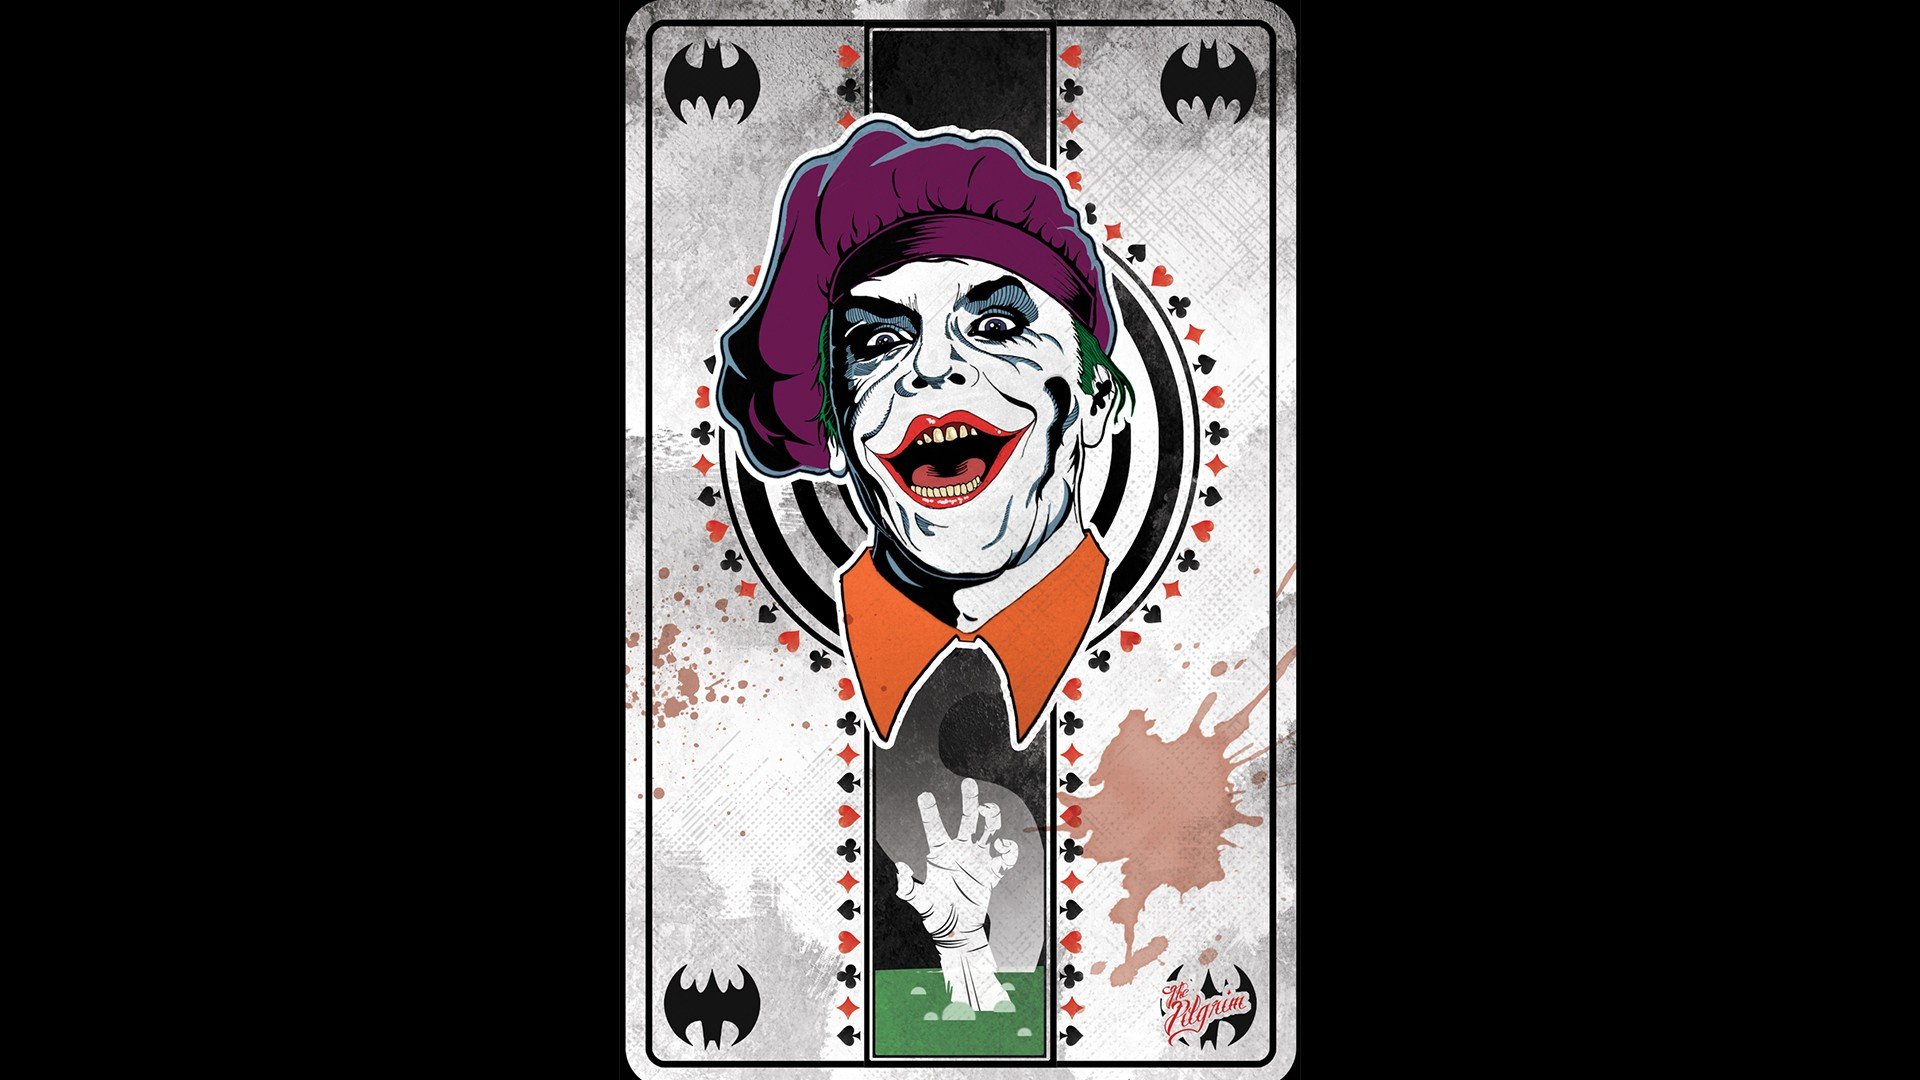 Joker Hd Wallpapers For Mobile Phones